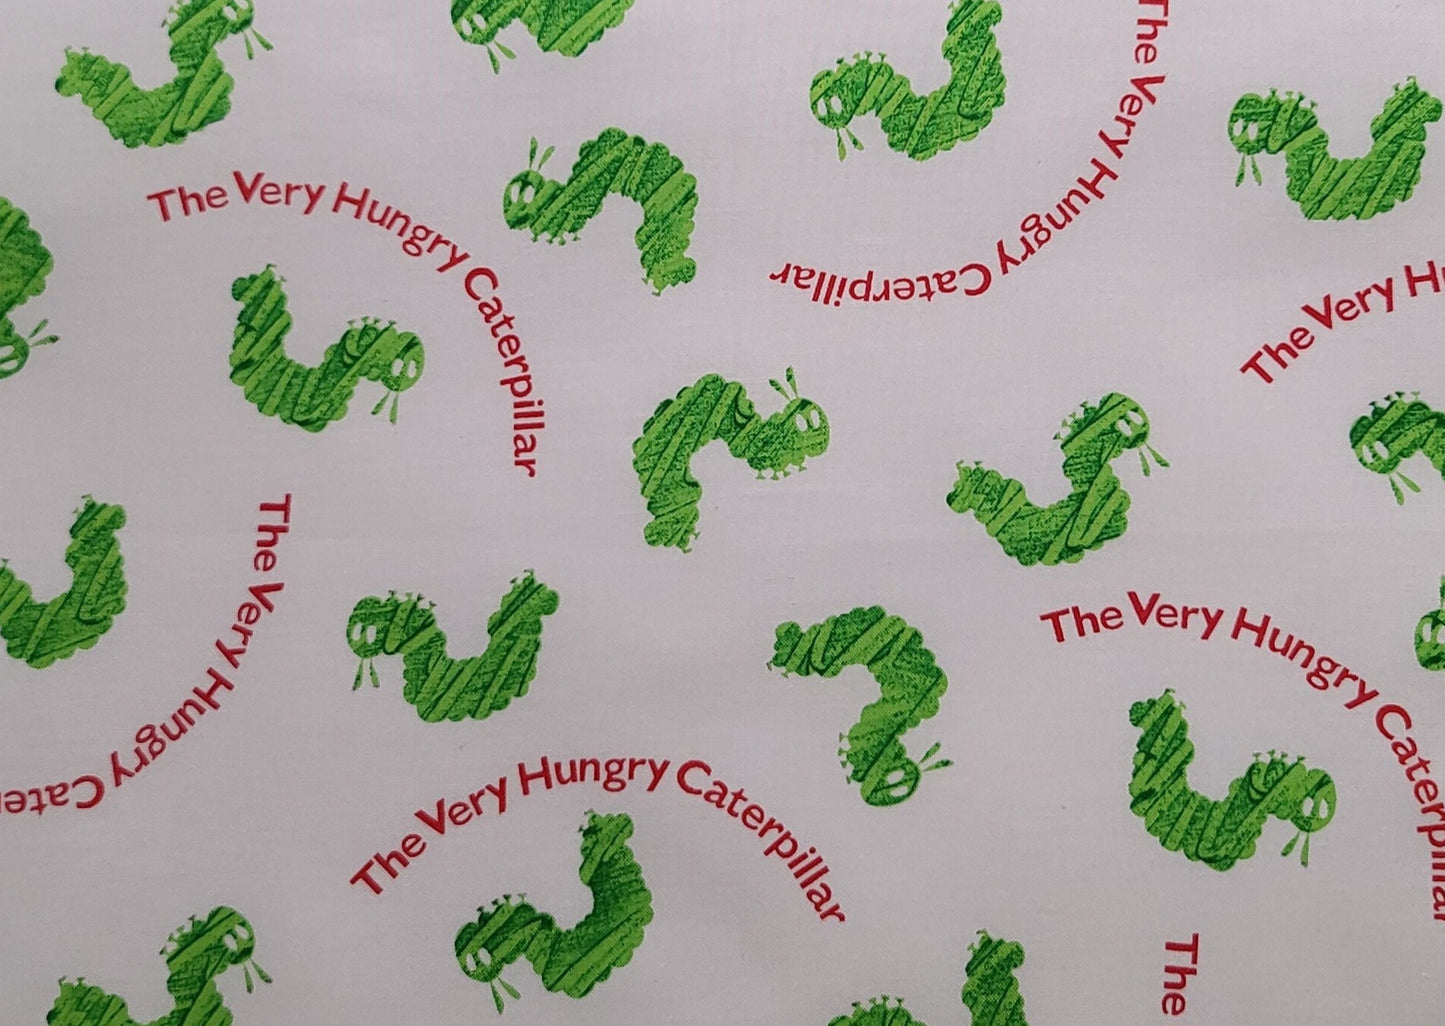 The Very Hungry Caterpillar Eric Carle LLC Andover Fabrics Patt#3473 - White Fabric / Bright Green Caterpillar / Red Script